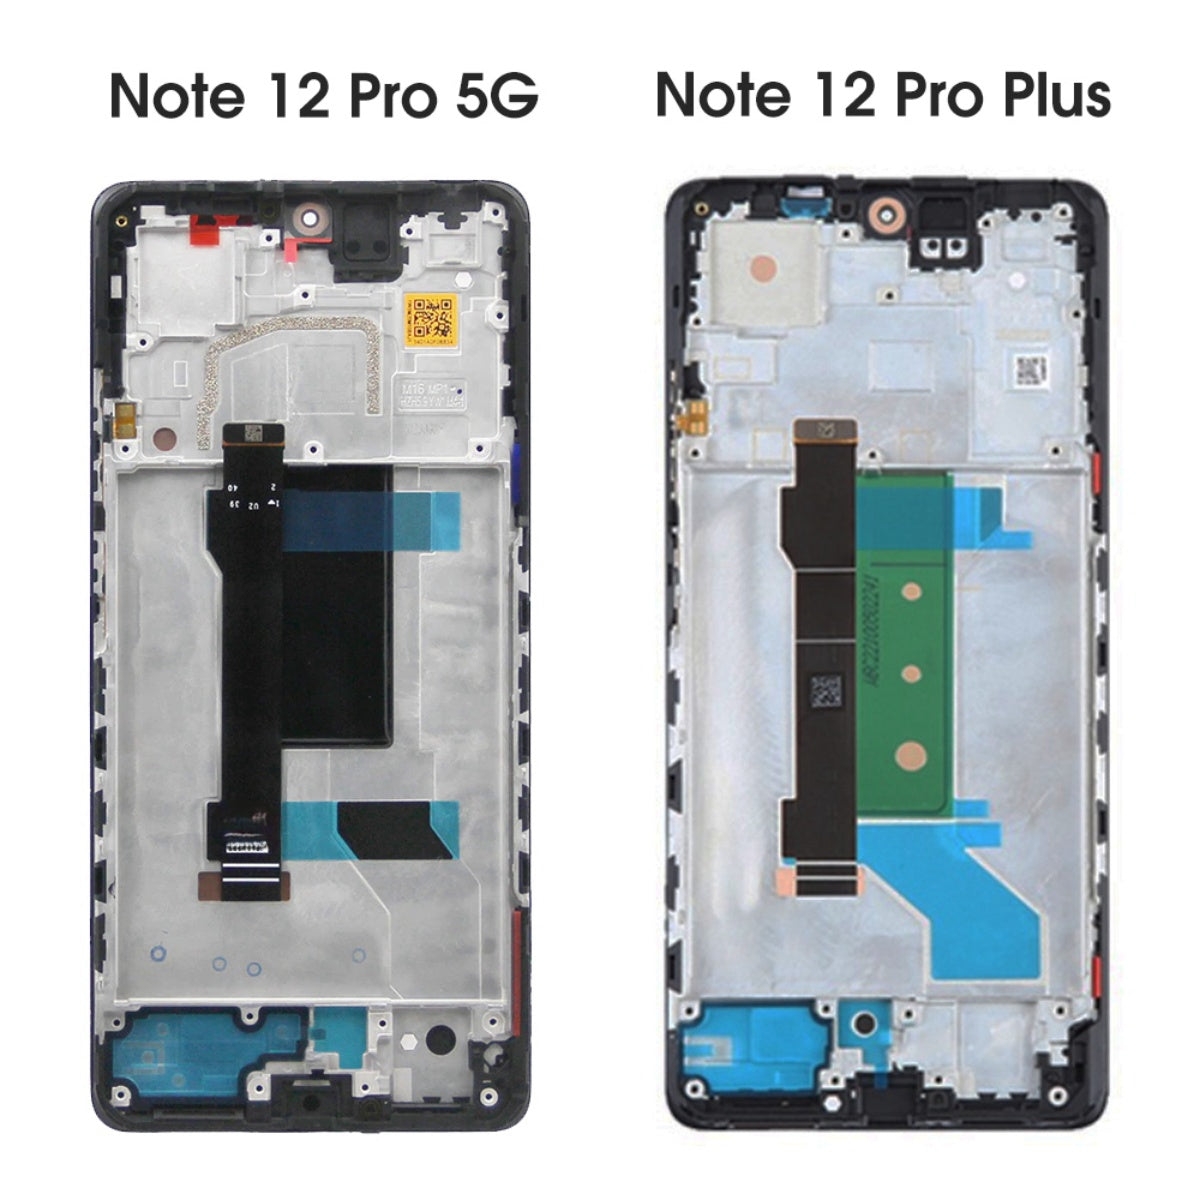 Xiaomi Redmi Note 12 Pro Plus 5G - Tech101